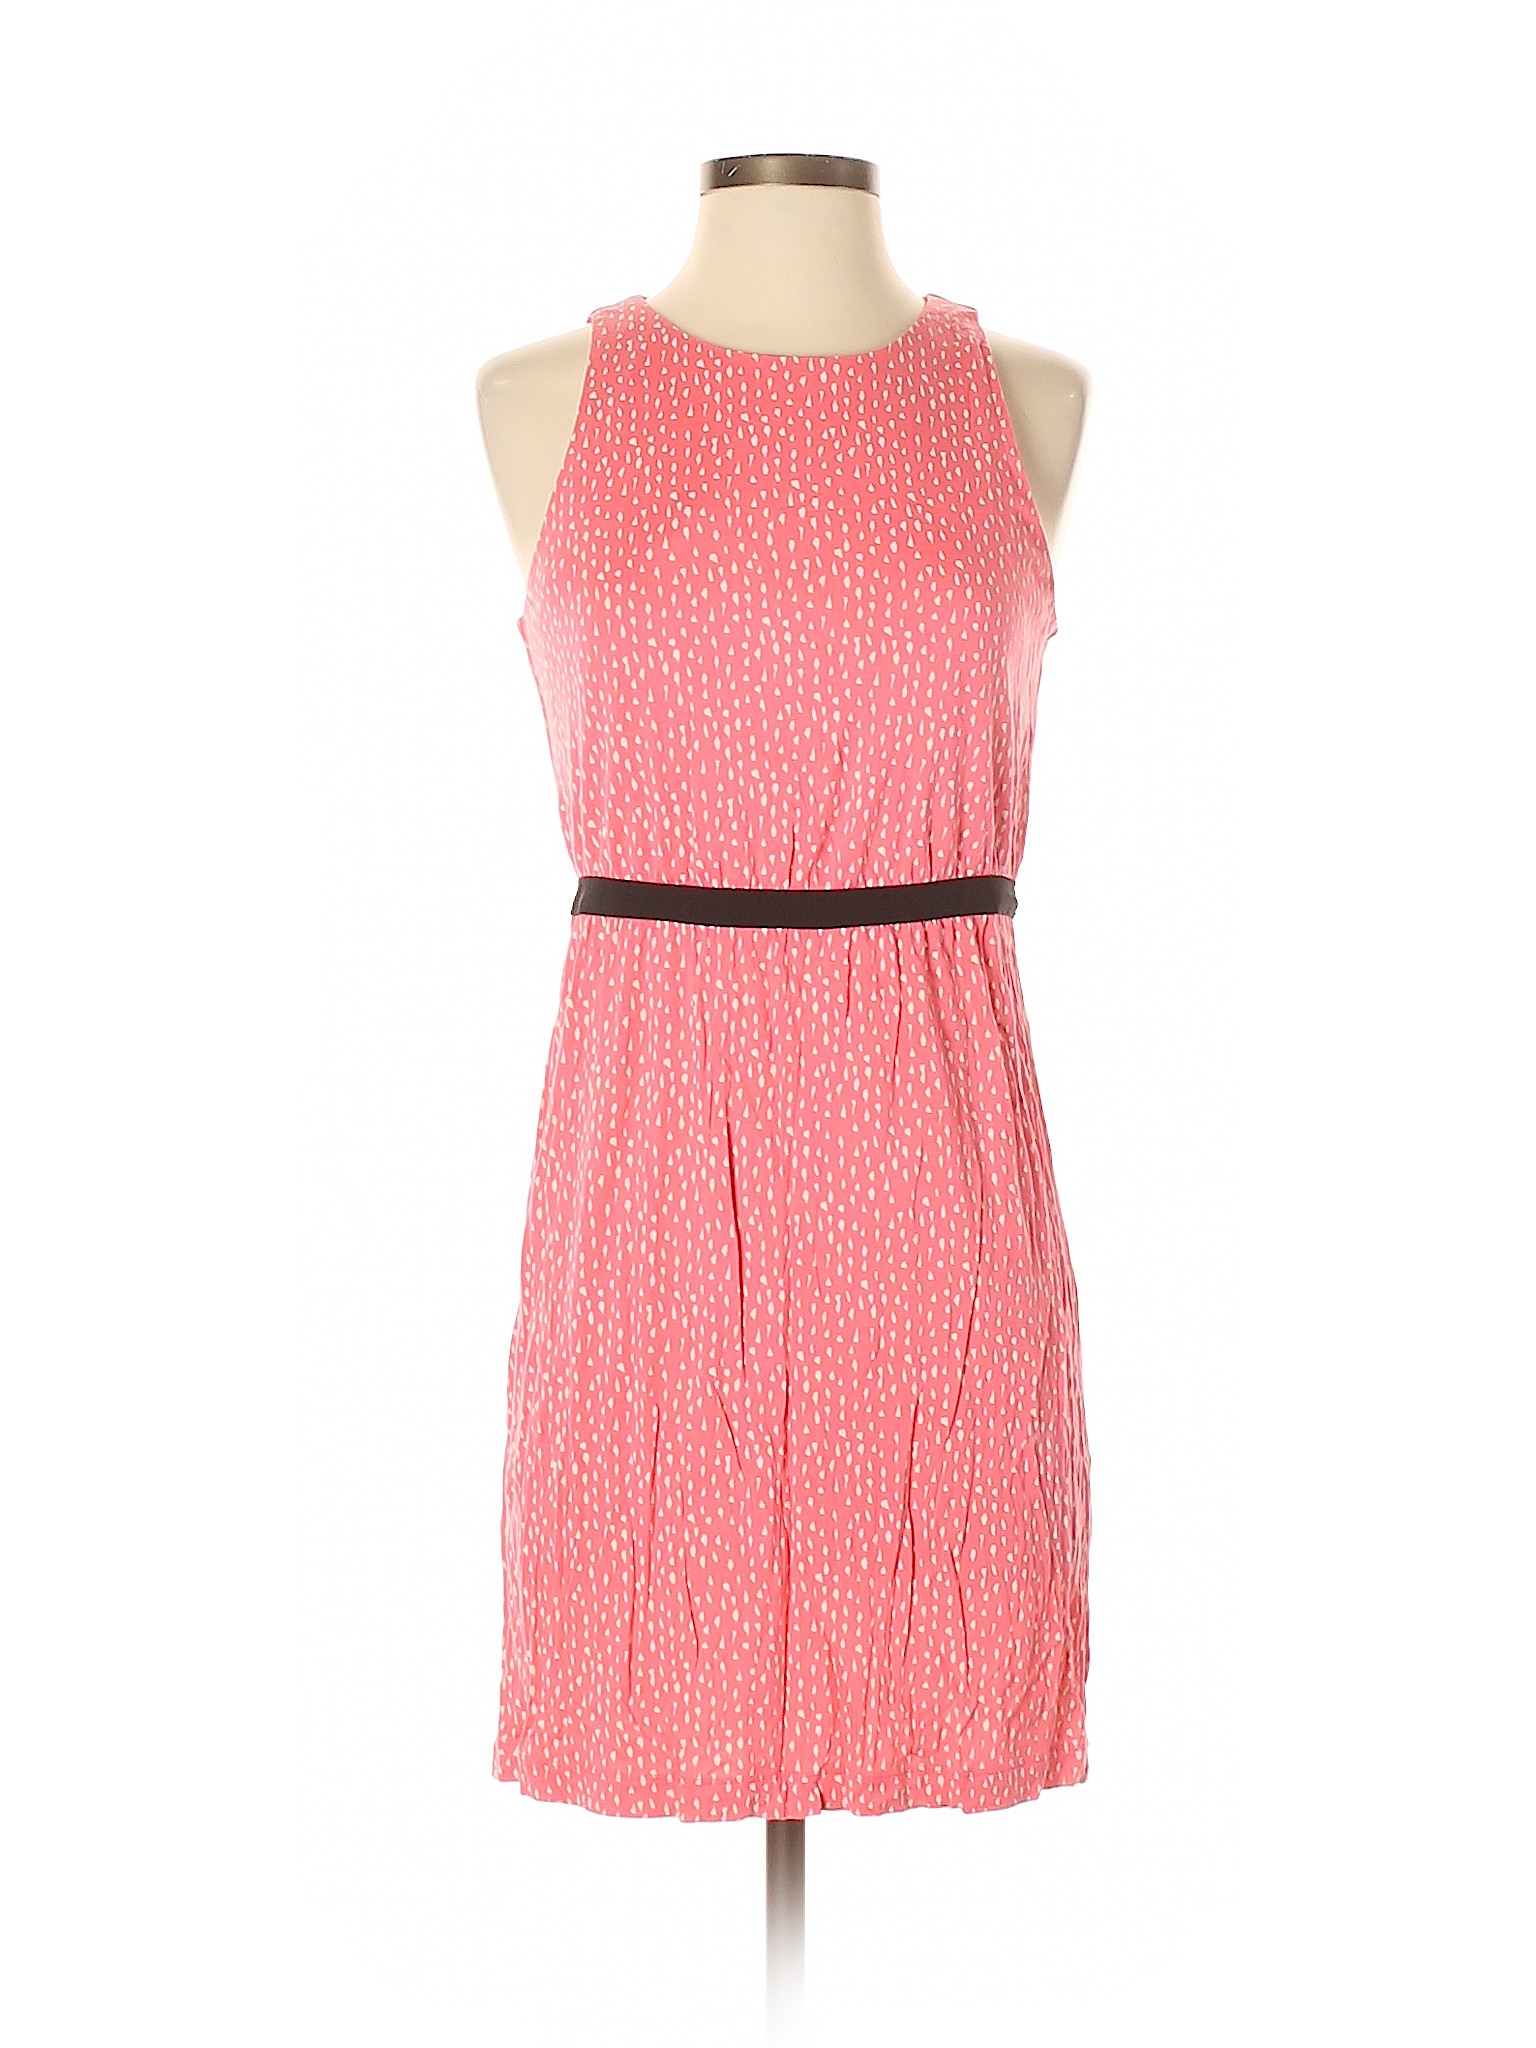 Ann Taylor Loft Women Pink Casual Dress Sm Petite | eBay